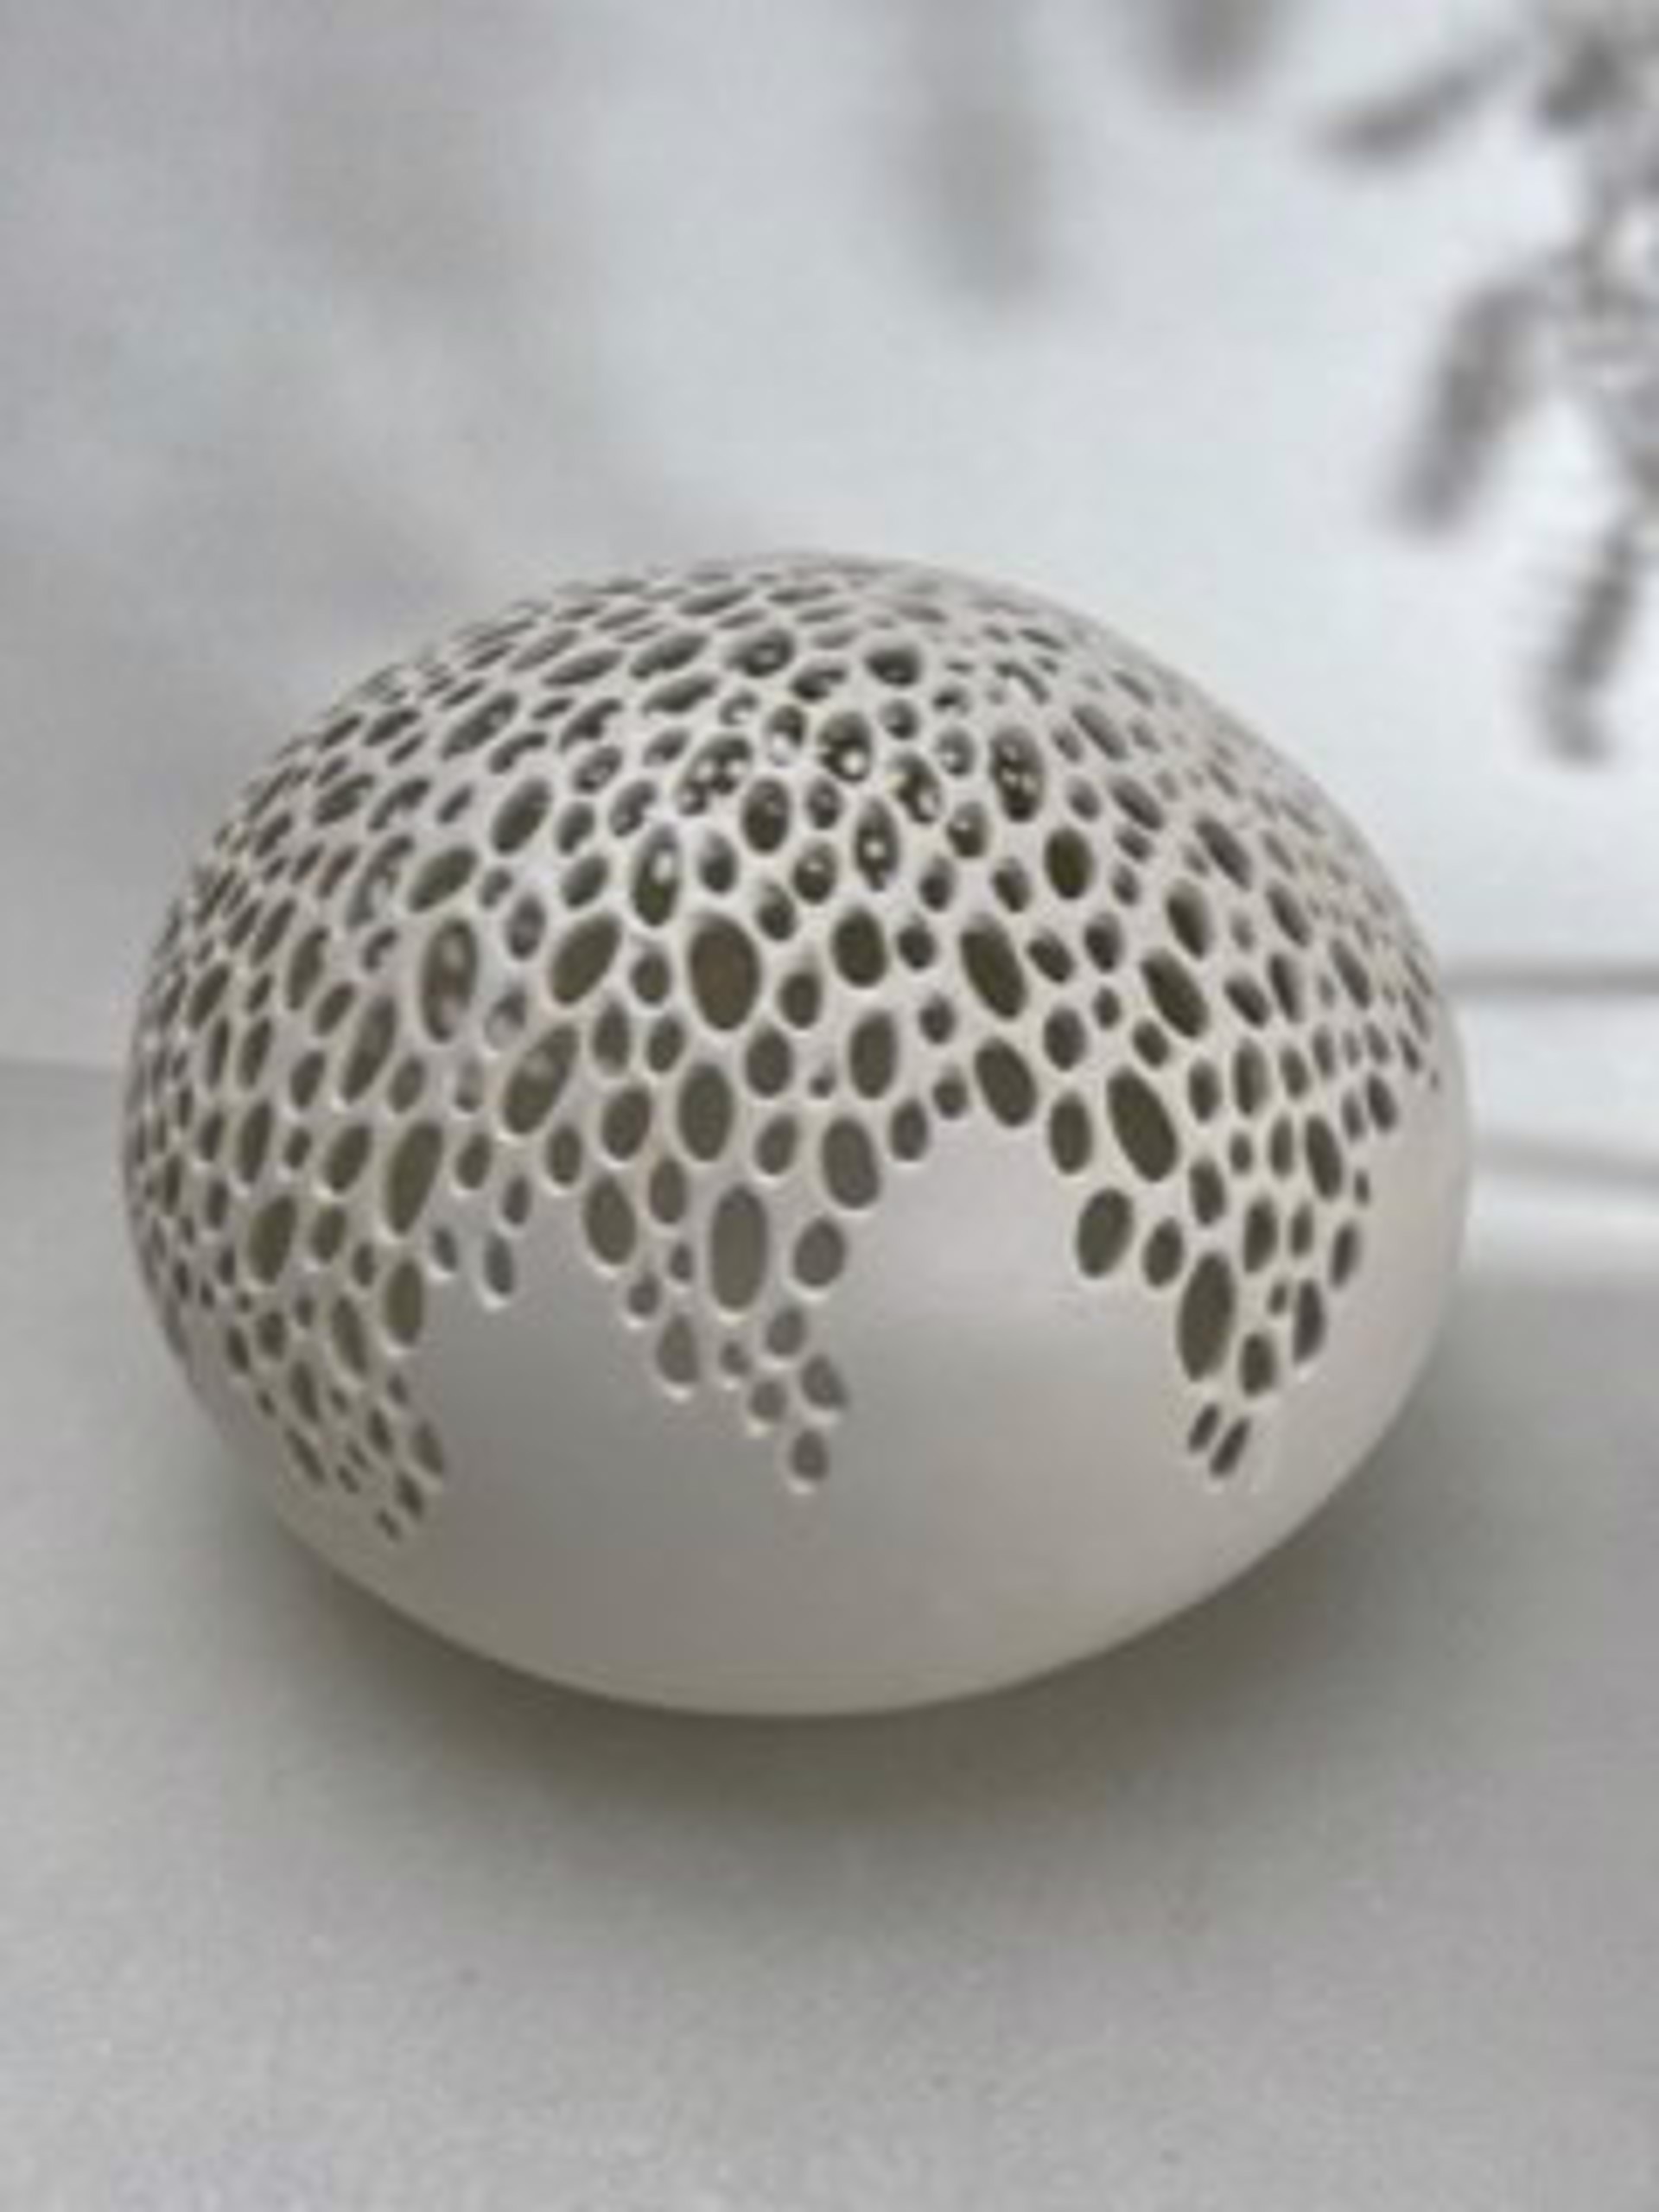 Pierced Bubble Vase by Kate Tremel